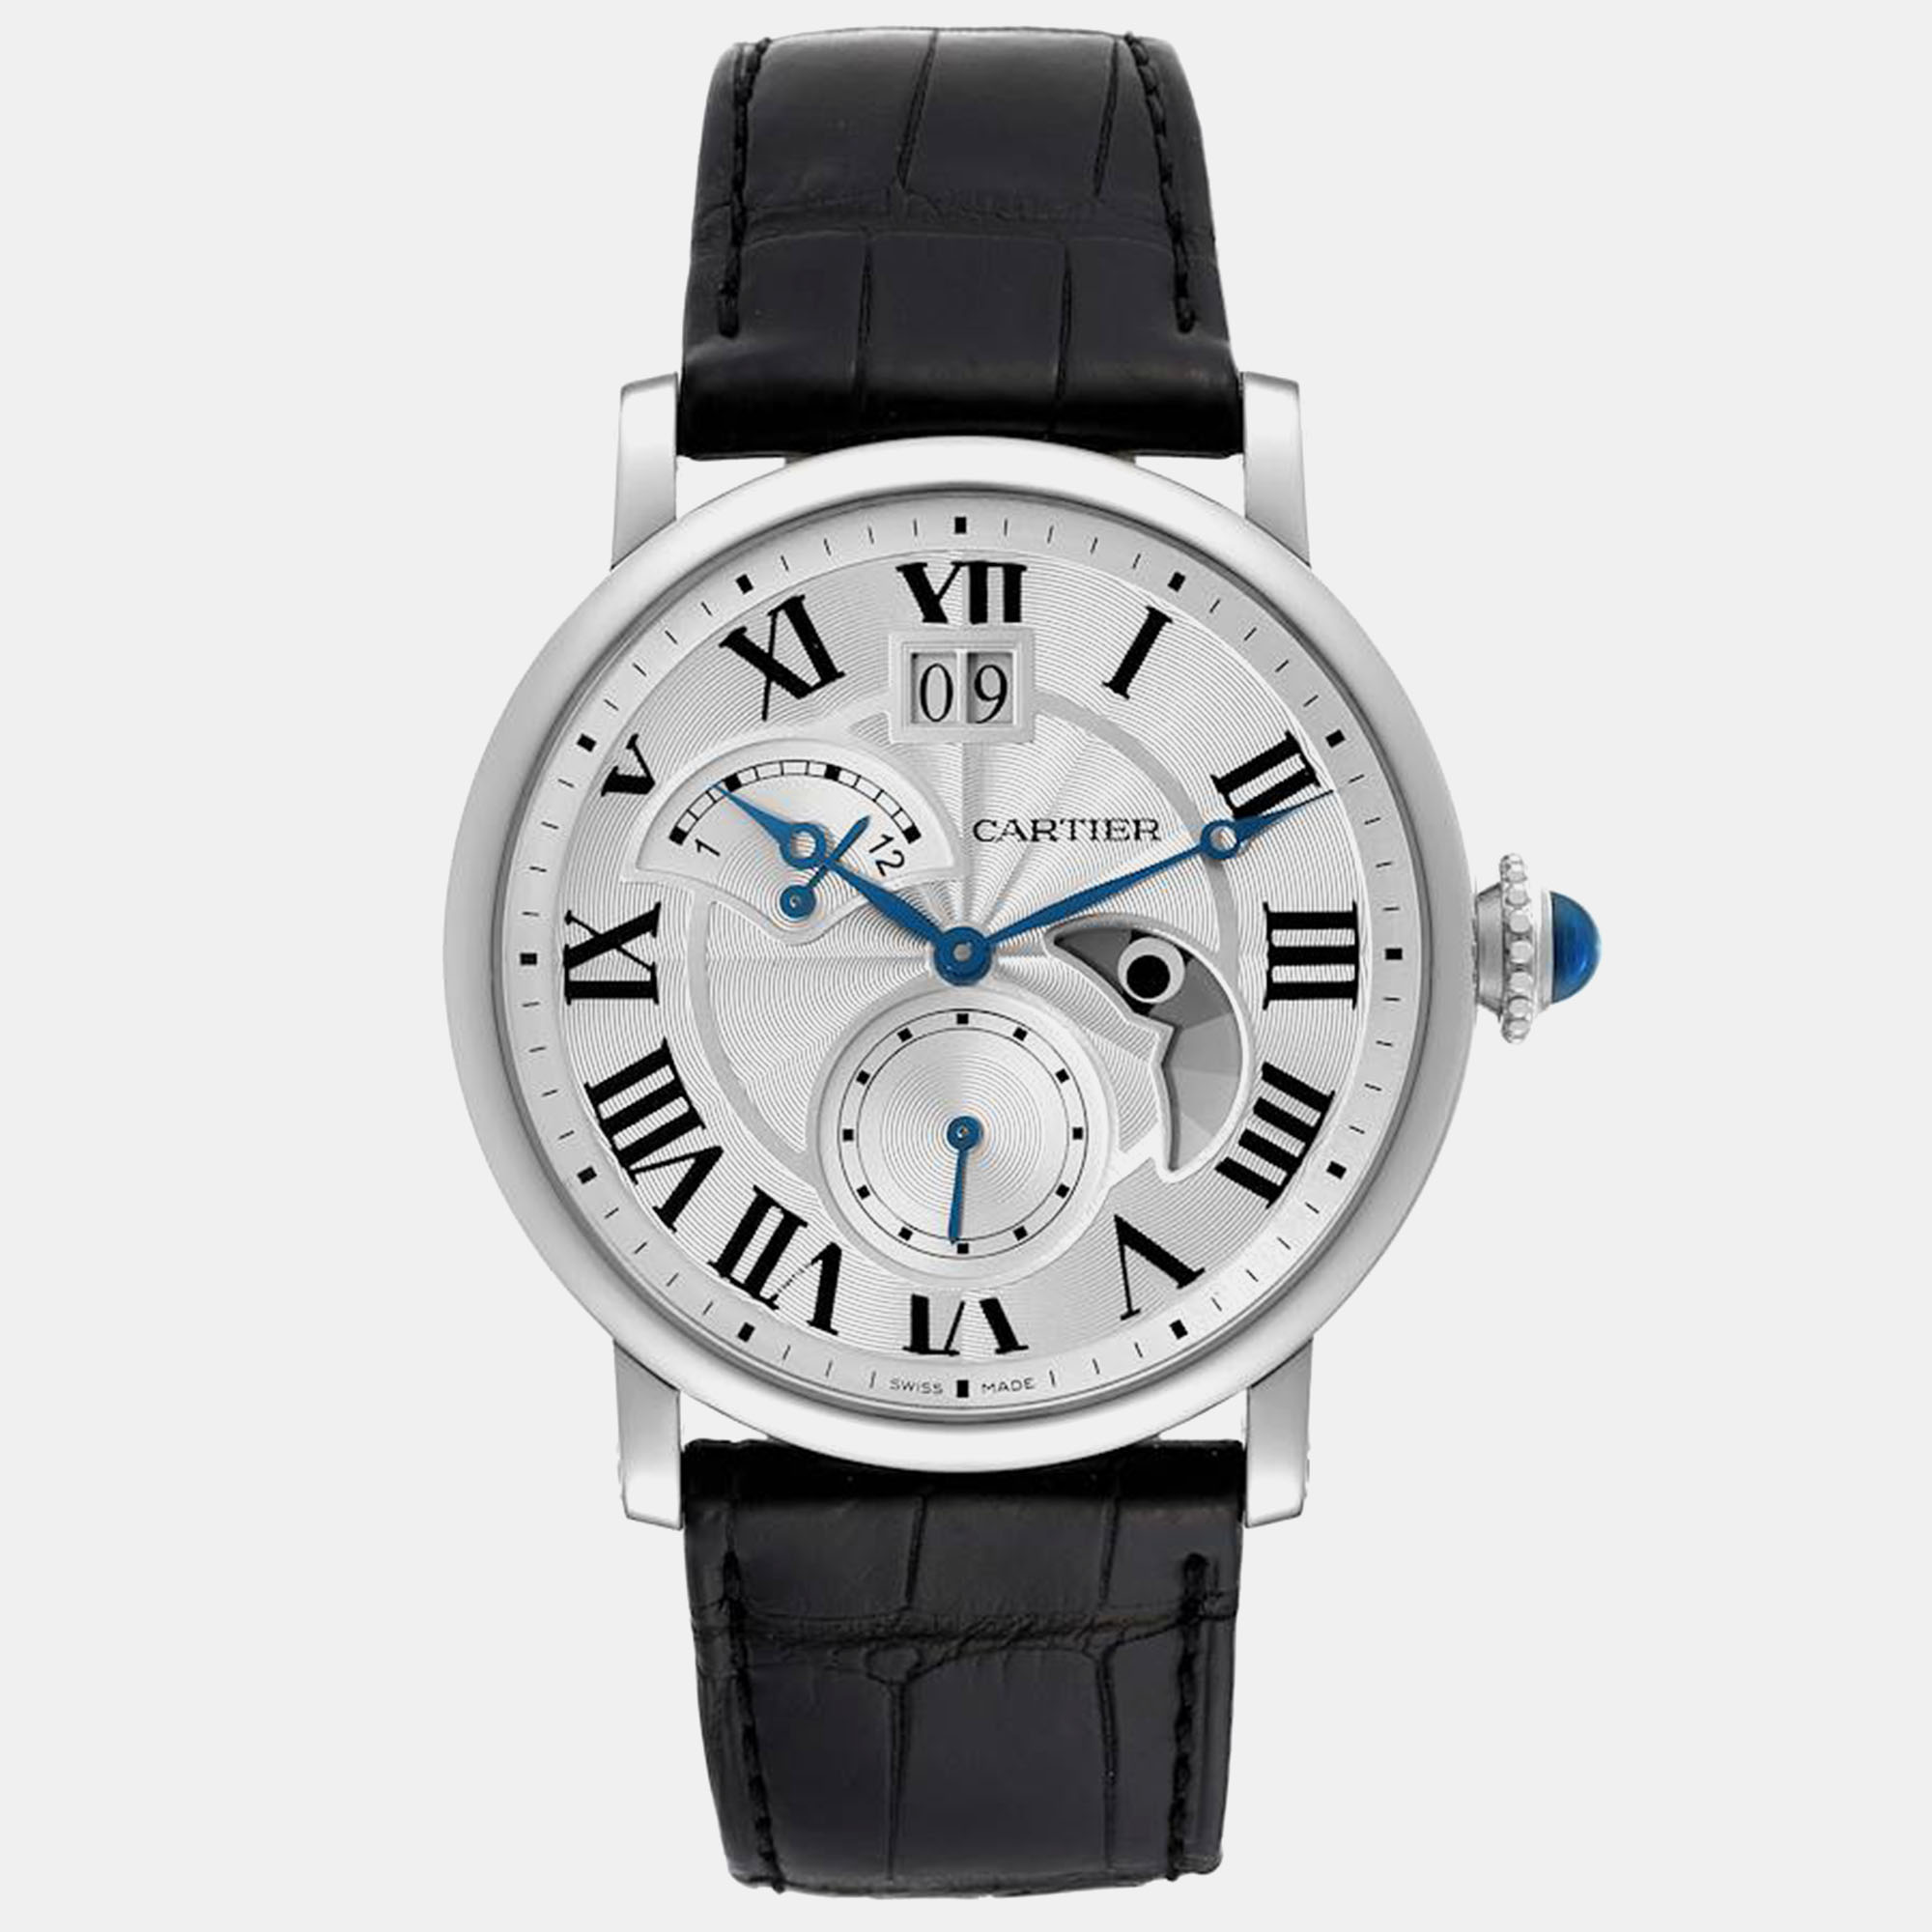 Cartier rotonde retrograde gmt steel silver dial men's watch w1556368 42 mm